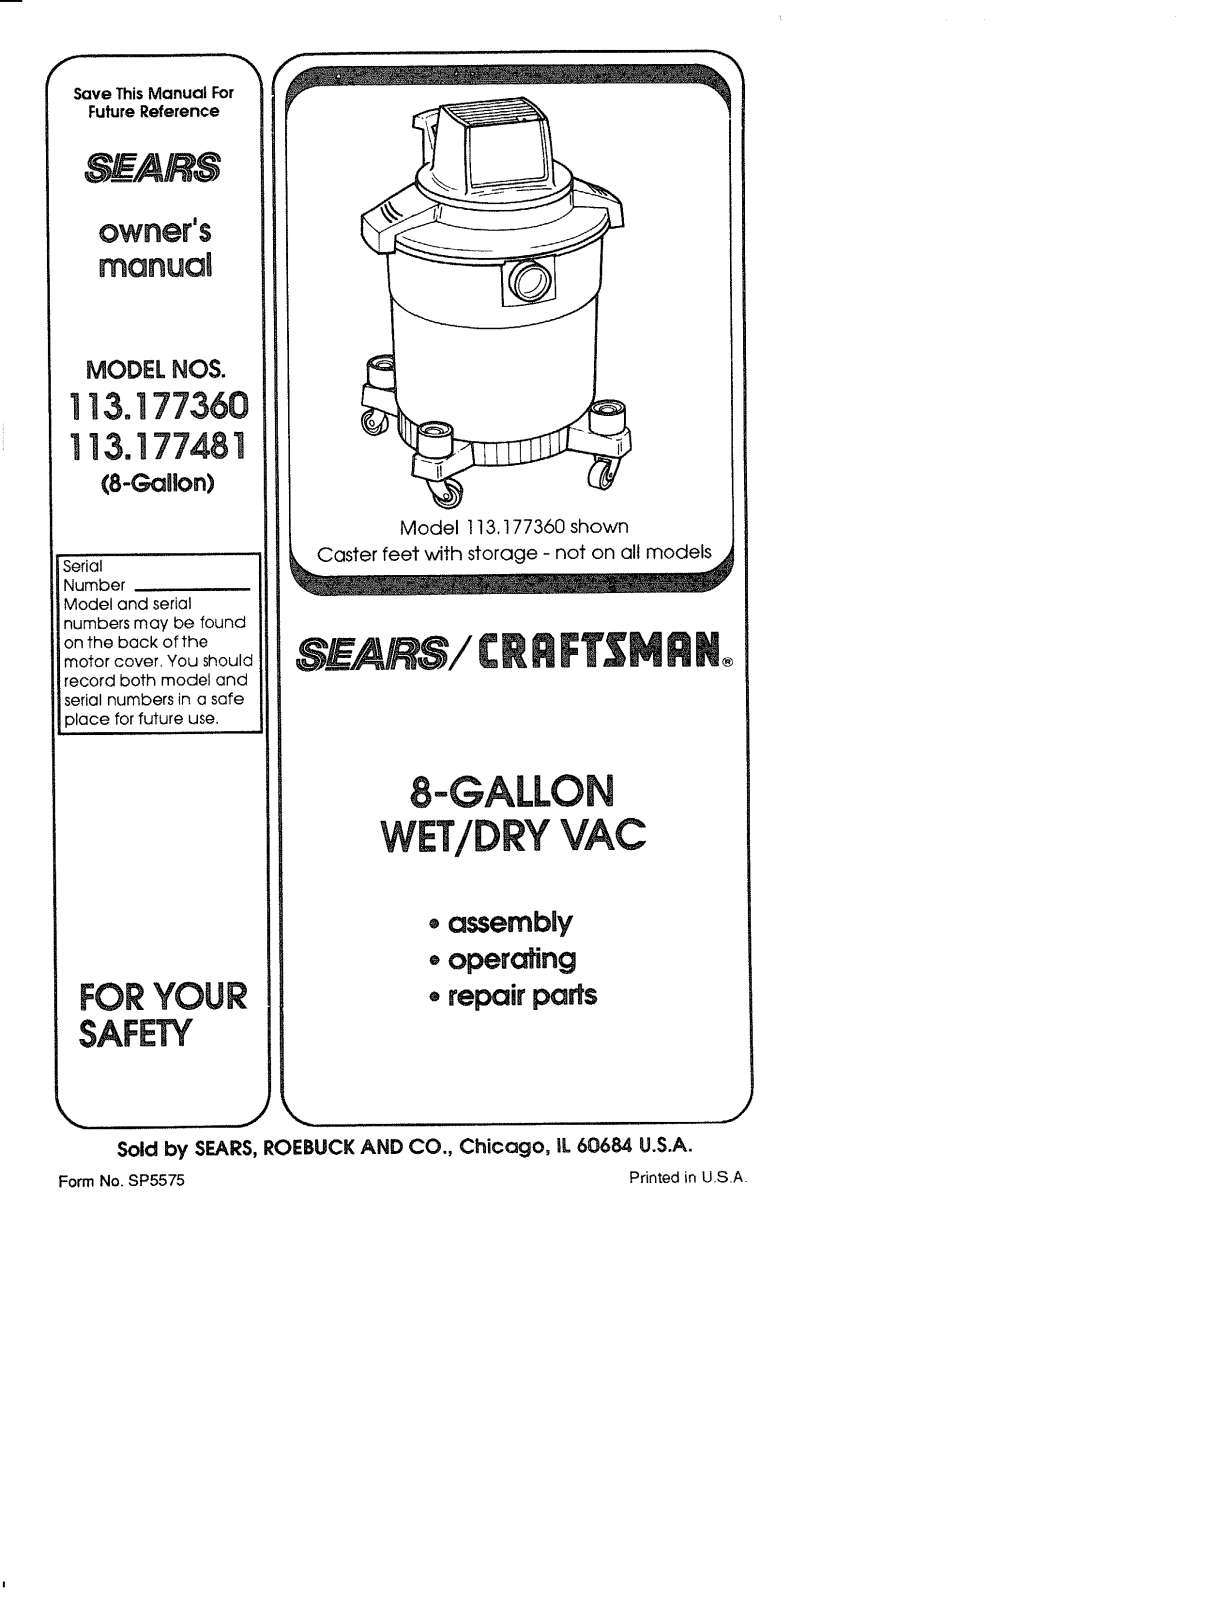 Craftsman 113177481, 113177360 Owner’s Manual